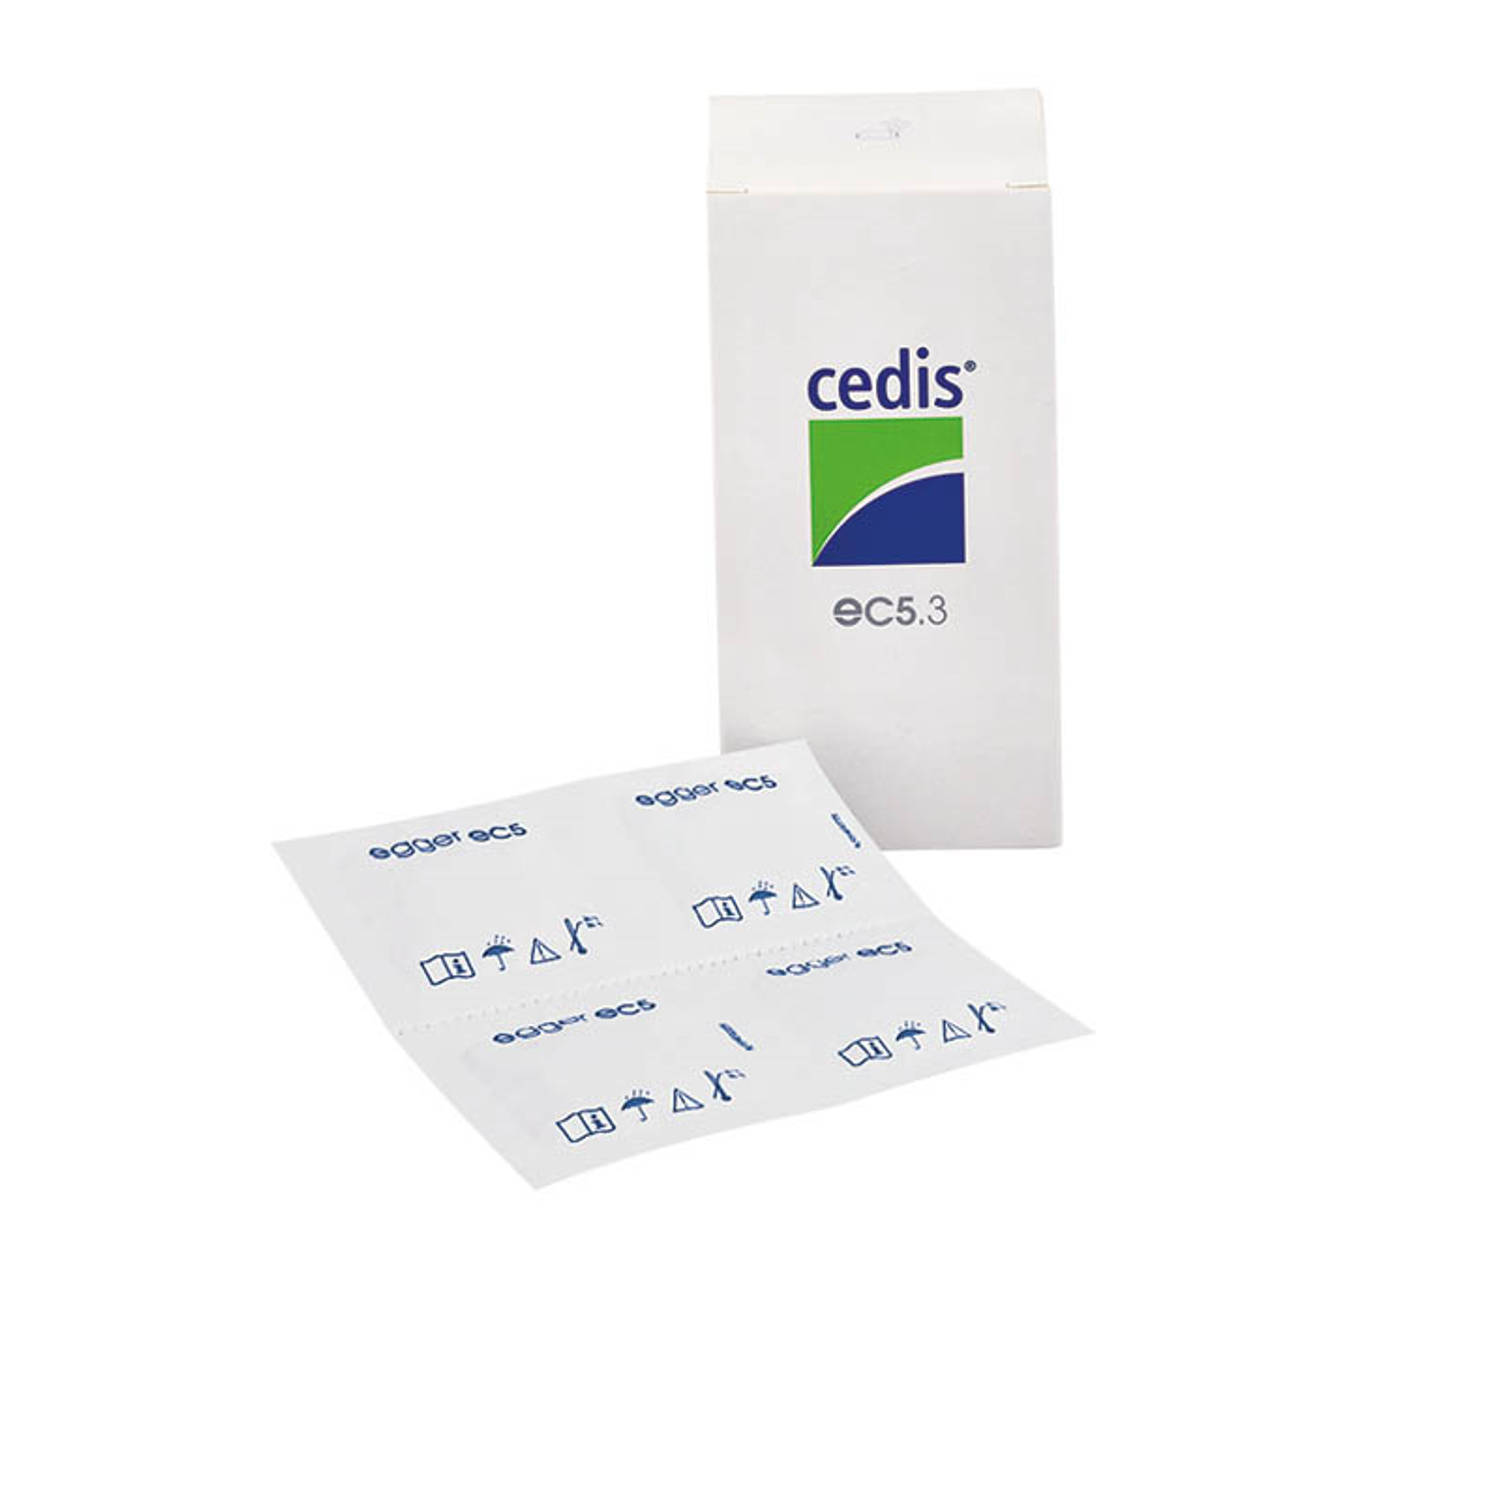 40 st. Cedis reinigingstabletten (2 x 20 st.) - Cedis-nr. 87100 dubbelverpakking